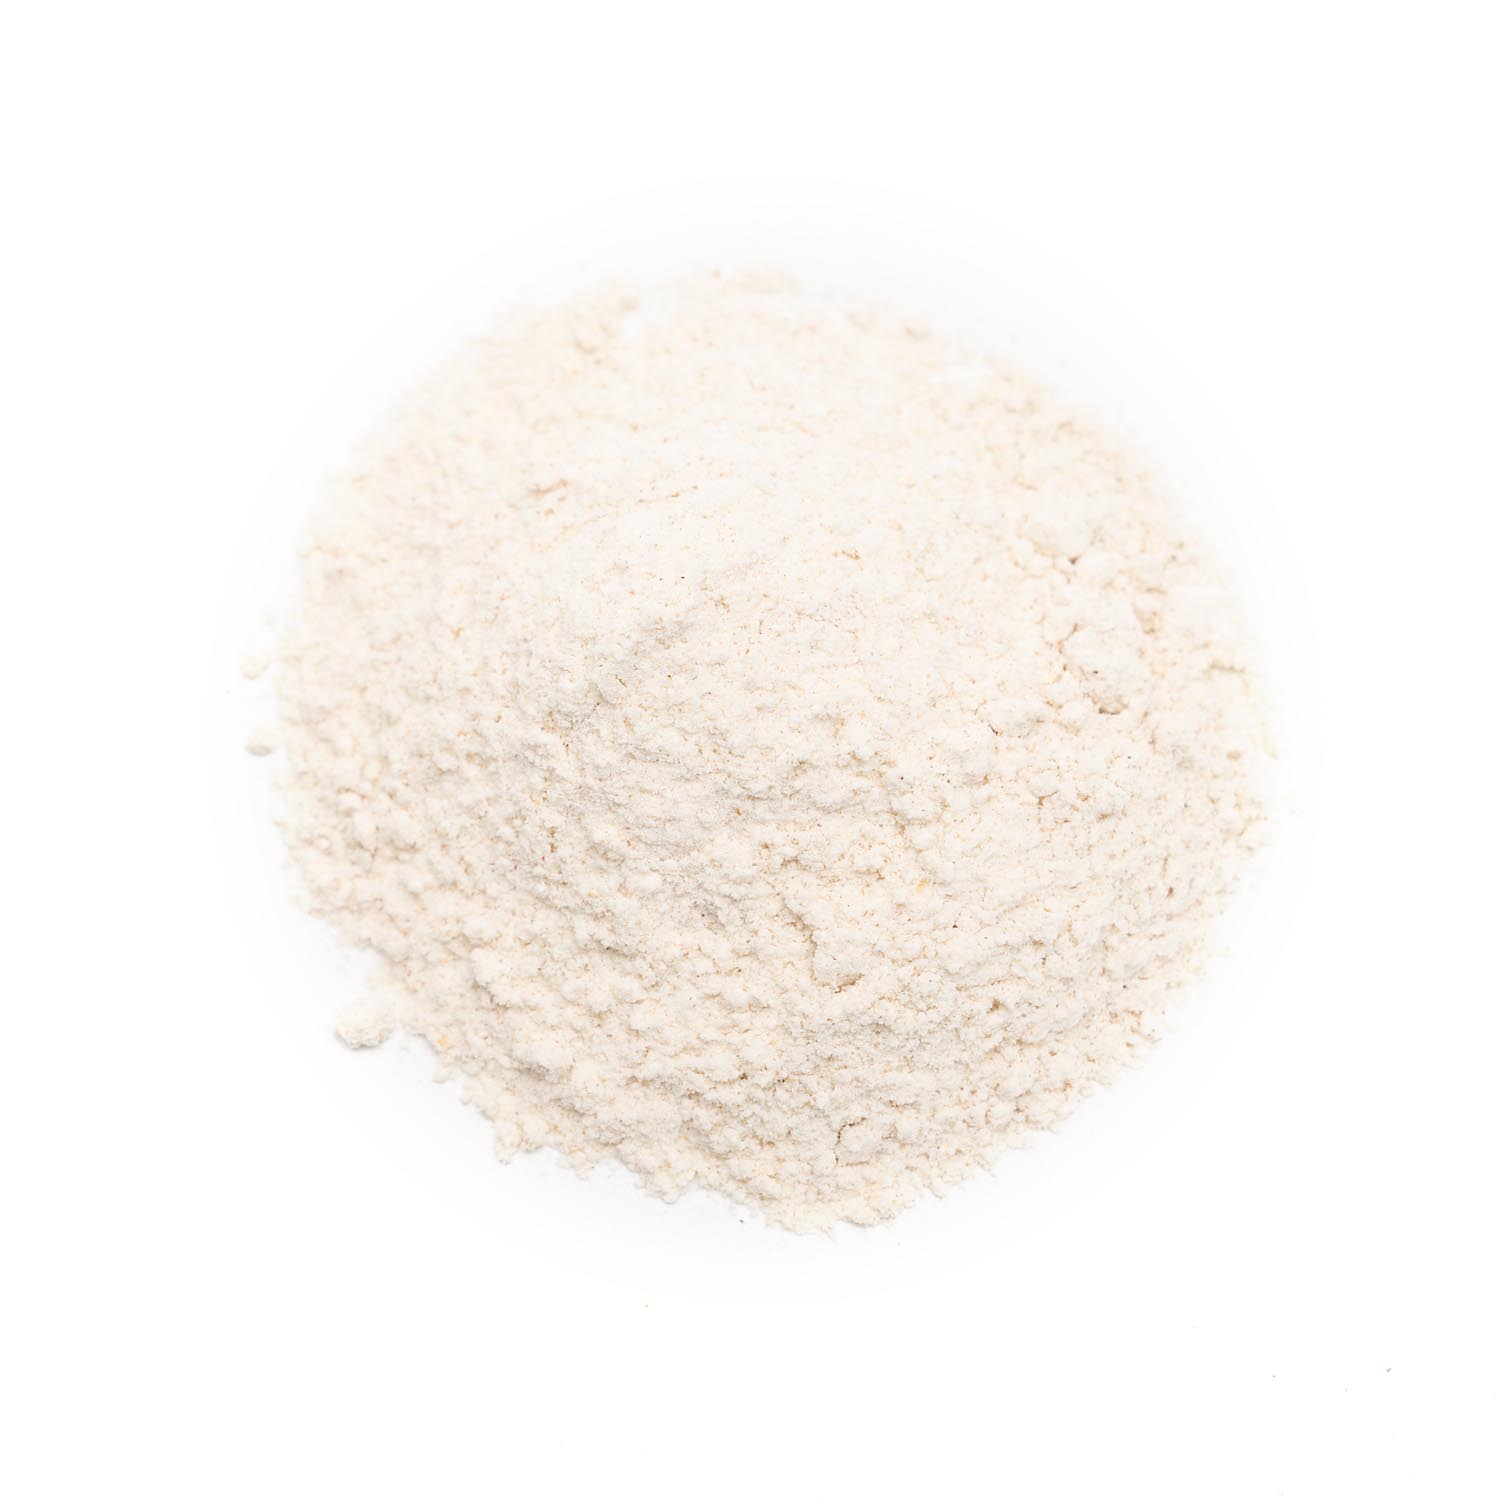 Organic Stone Ground Flour